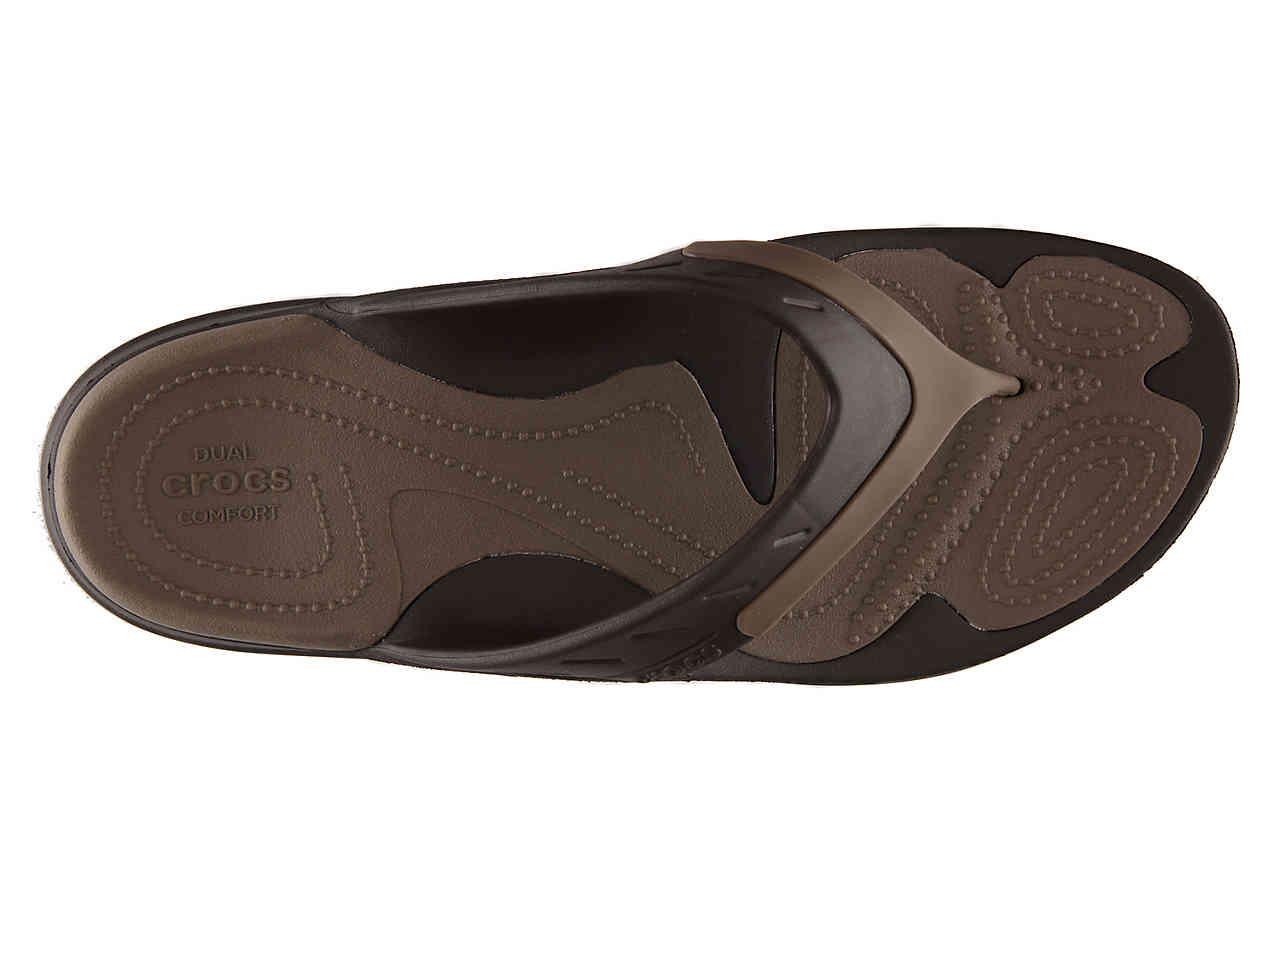 Crocs™ Unisex's Modi Sport Flip Flops in Brown/Tan (Brown) for Men - Lyst